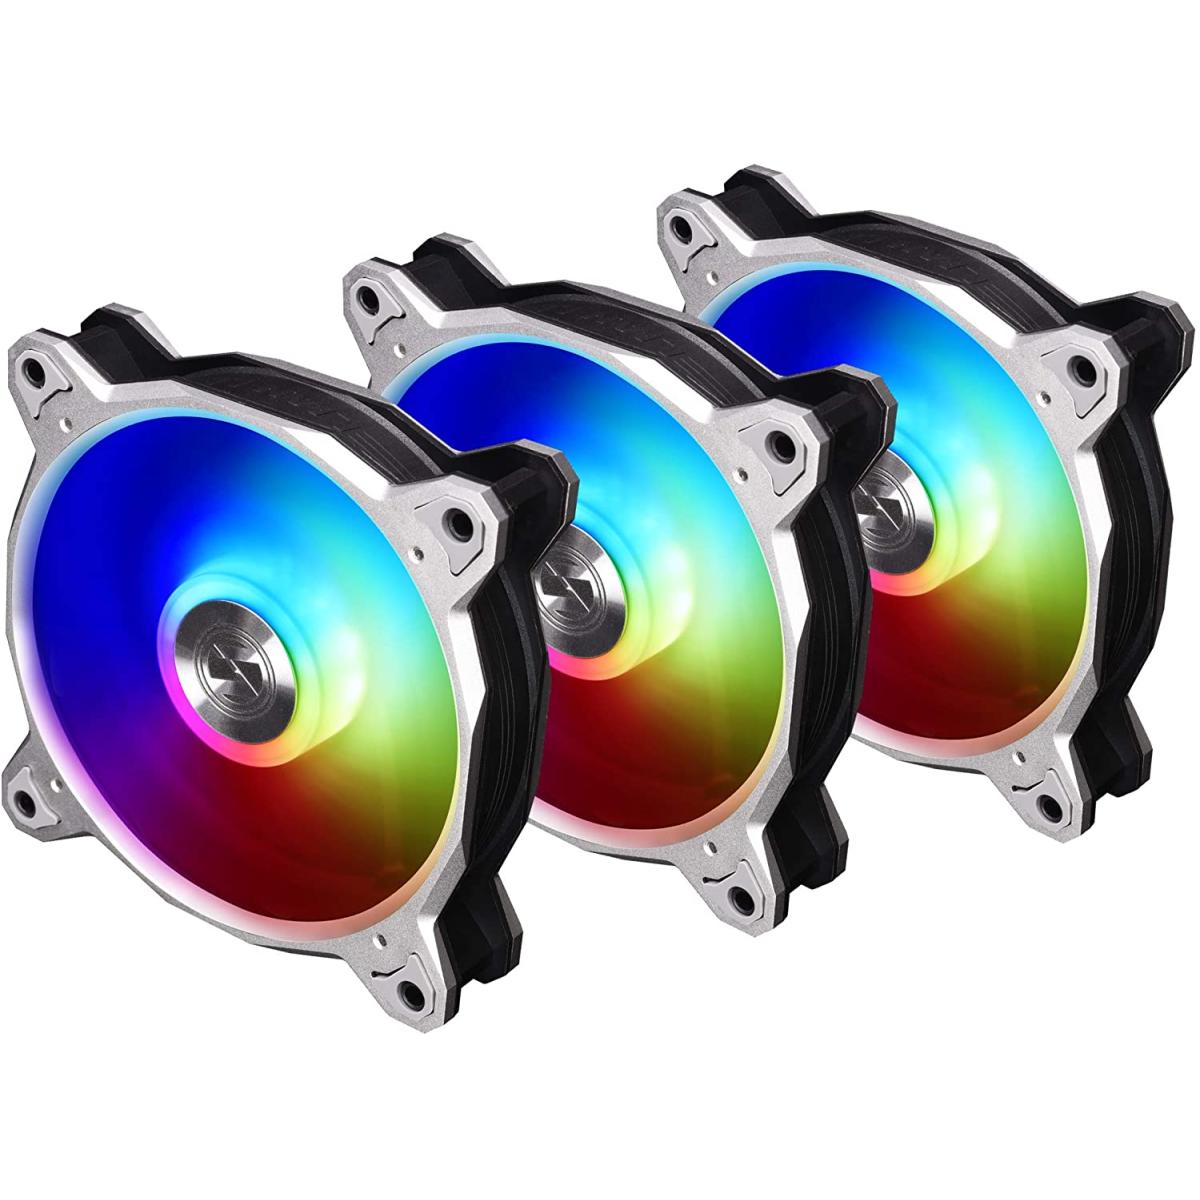 LIAN LI Bora Digital Series RGB 120mm ARGB LED PWM Fan, 3 Fans Pack - (Silver Or Black Or Space Grey Colors) Frame